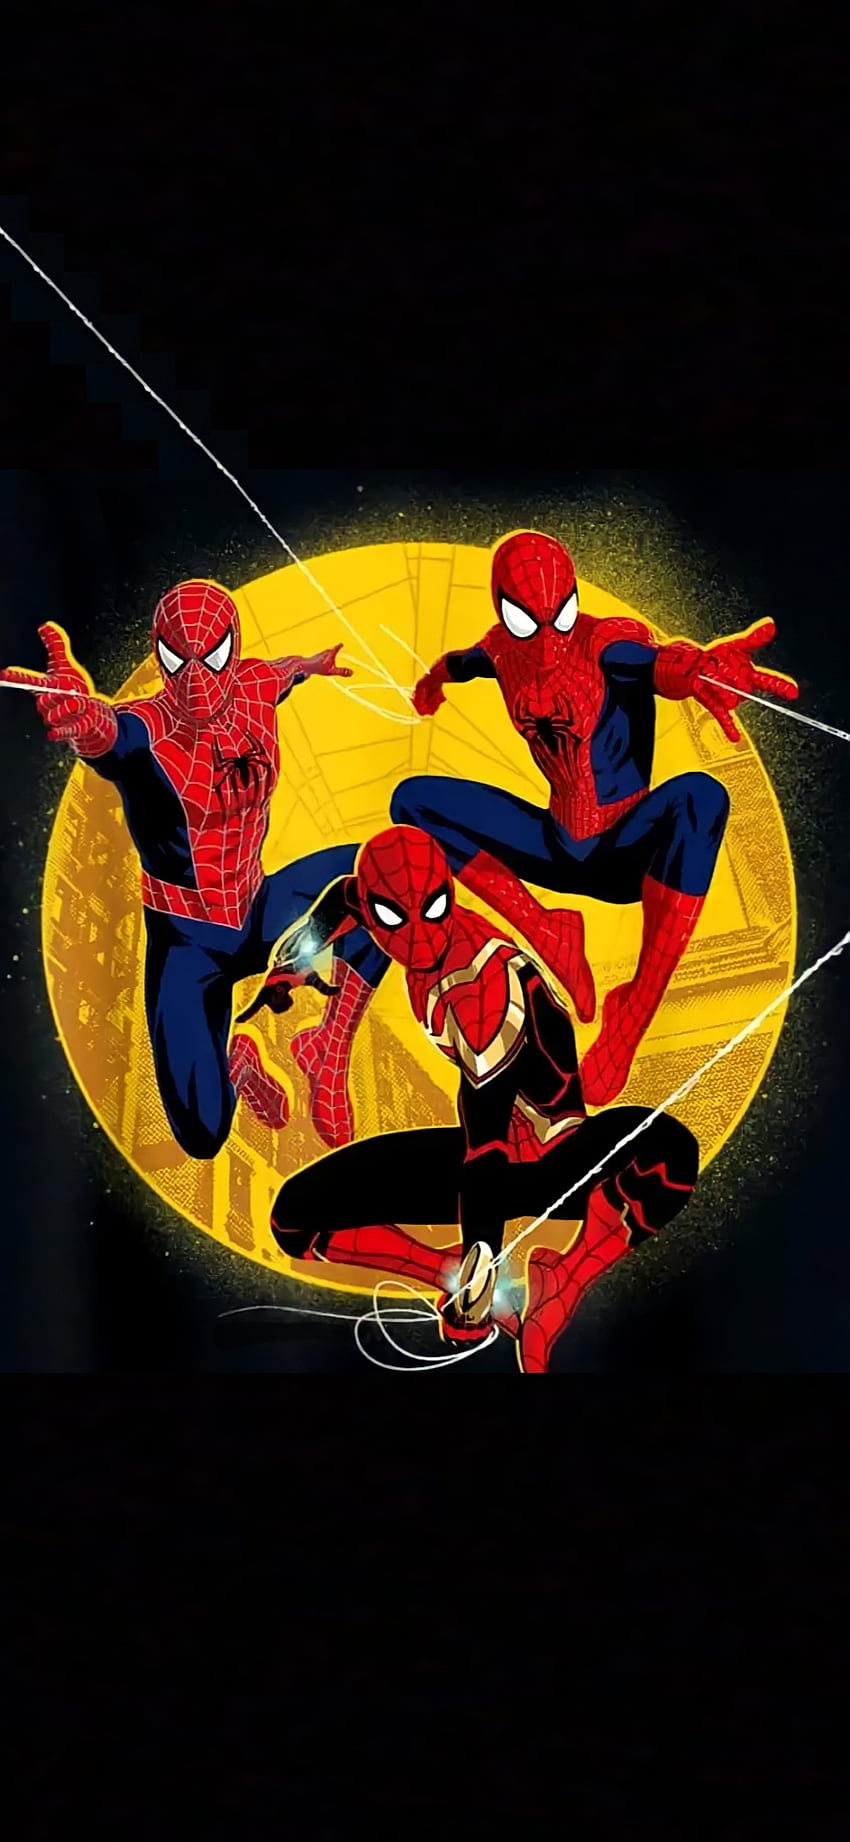 Spider-Man Tidak Ada Jalan Pulang, Tobey Maguire, Tidak ada jalan pulang, Peter Parker, Andrew Garfield, Spiderverse, Marvel, Tom Holland, Manusia laba-laba, Manusia laba-laba yang menakjubkan, Pembalas, manusia laba-laba, Komik wallpaper ponsel HD